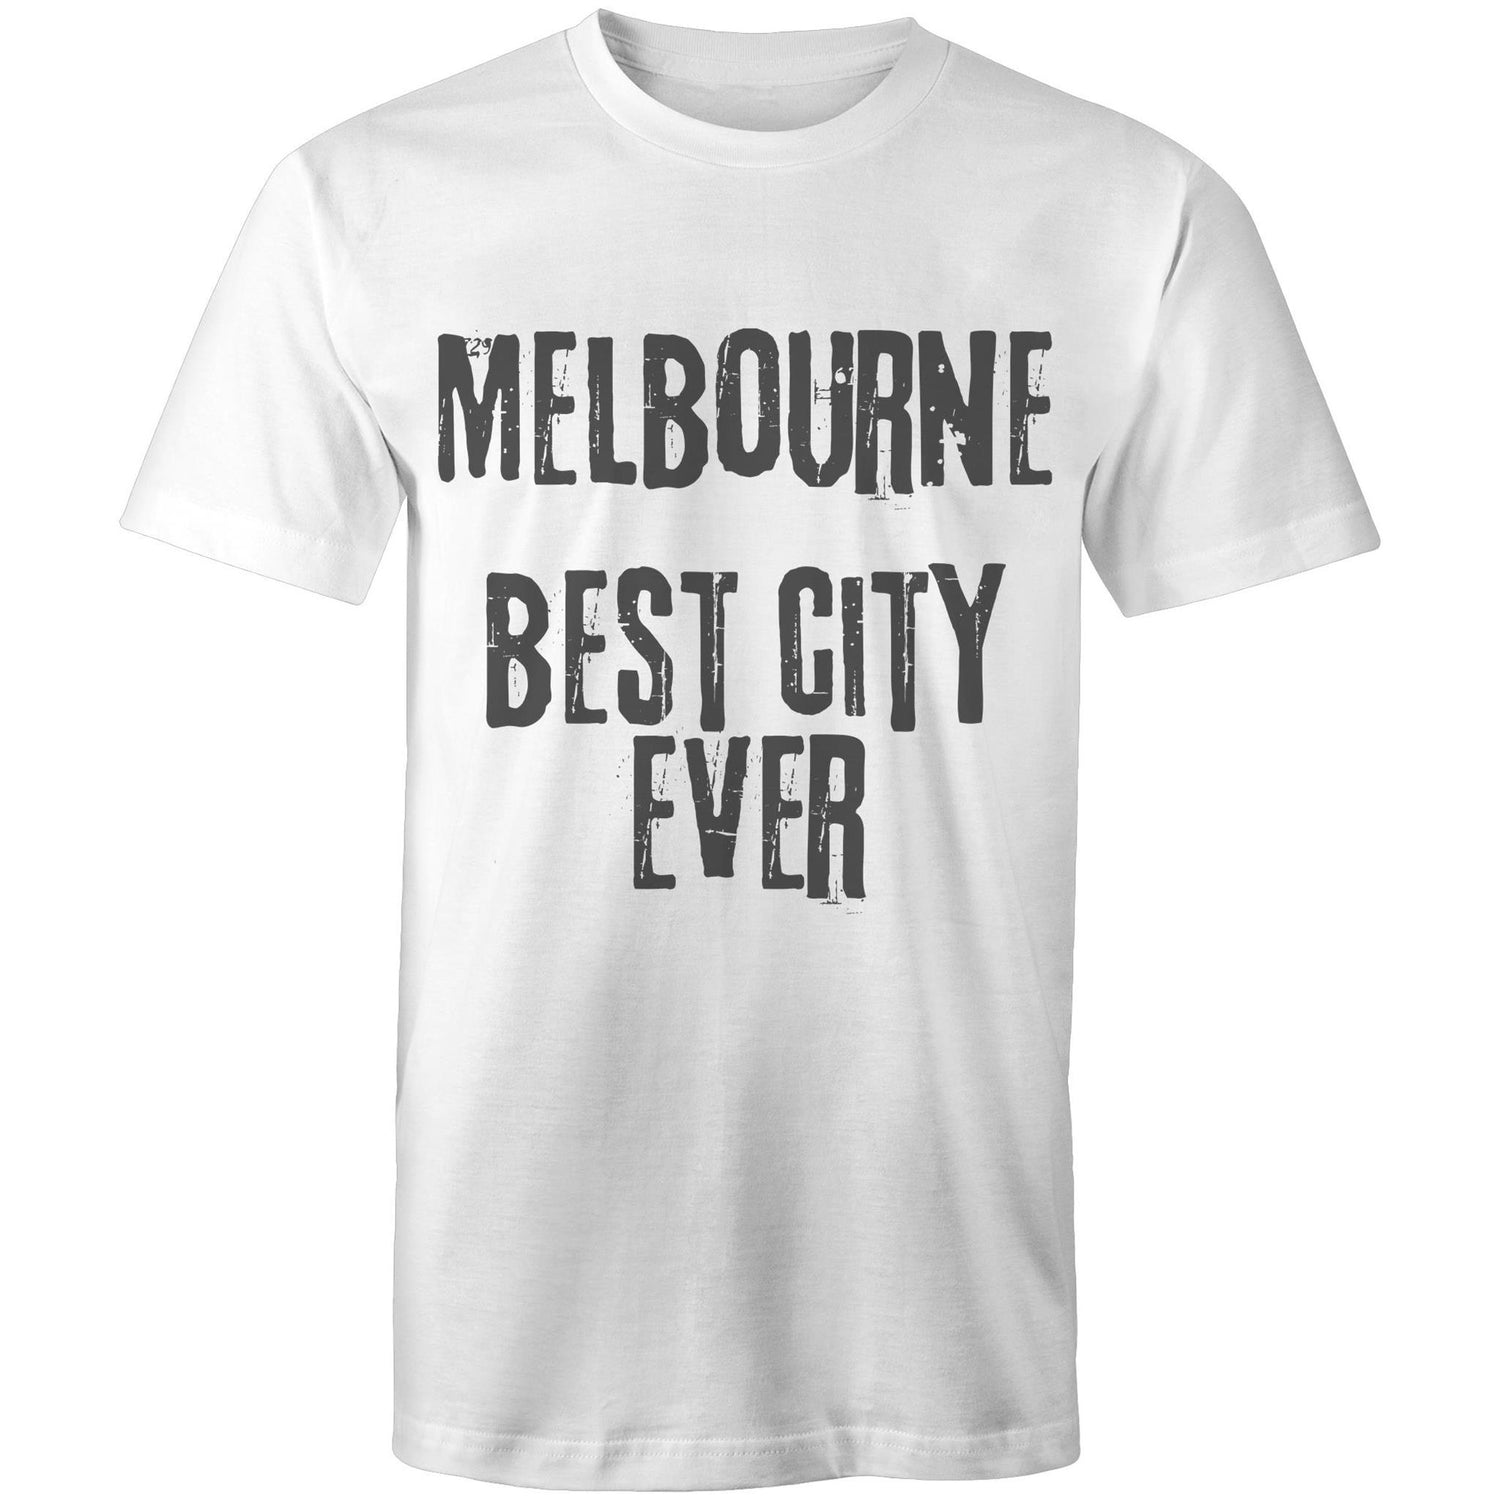 Men's T-shirt "Melbourne Best City Ever" Slogan Proud Fashion Printed Tee